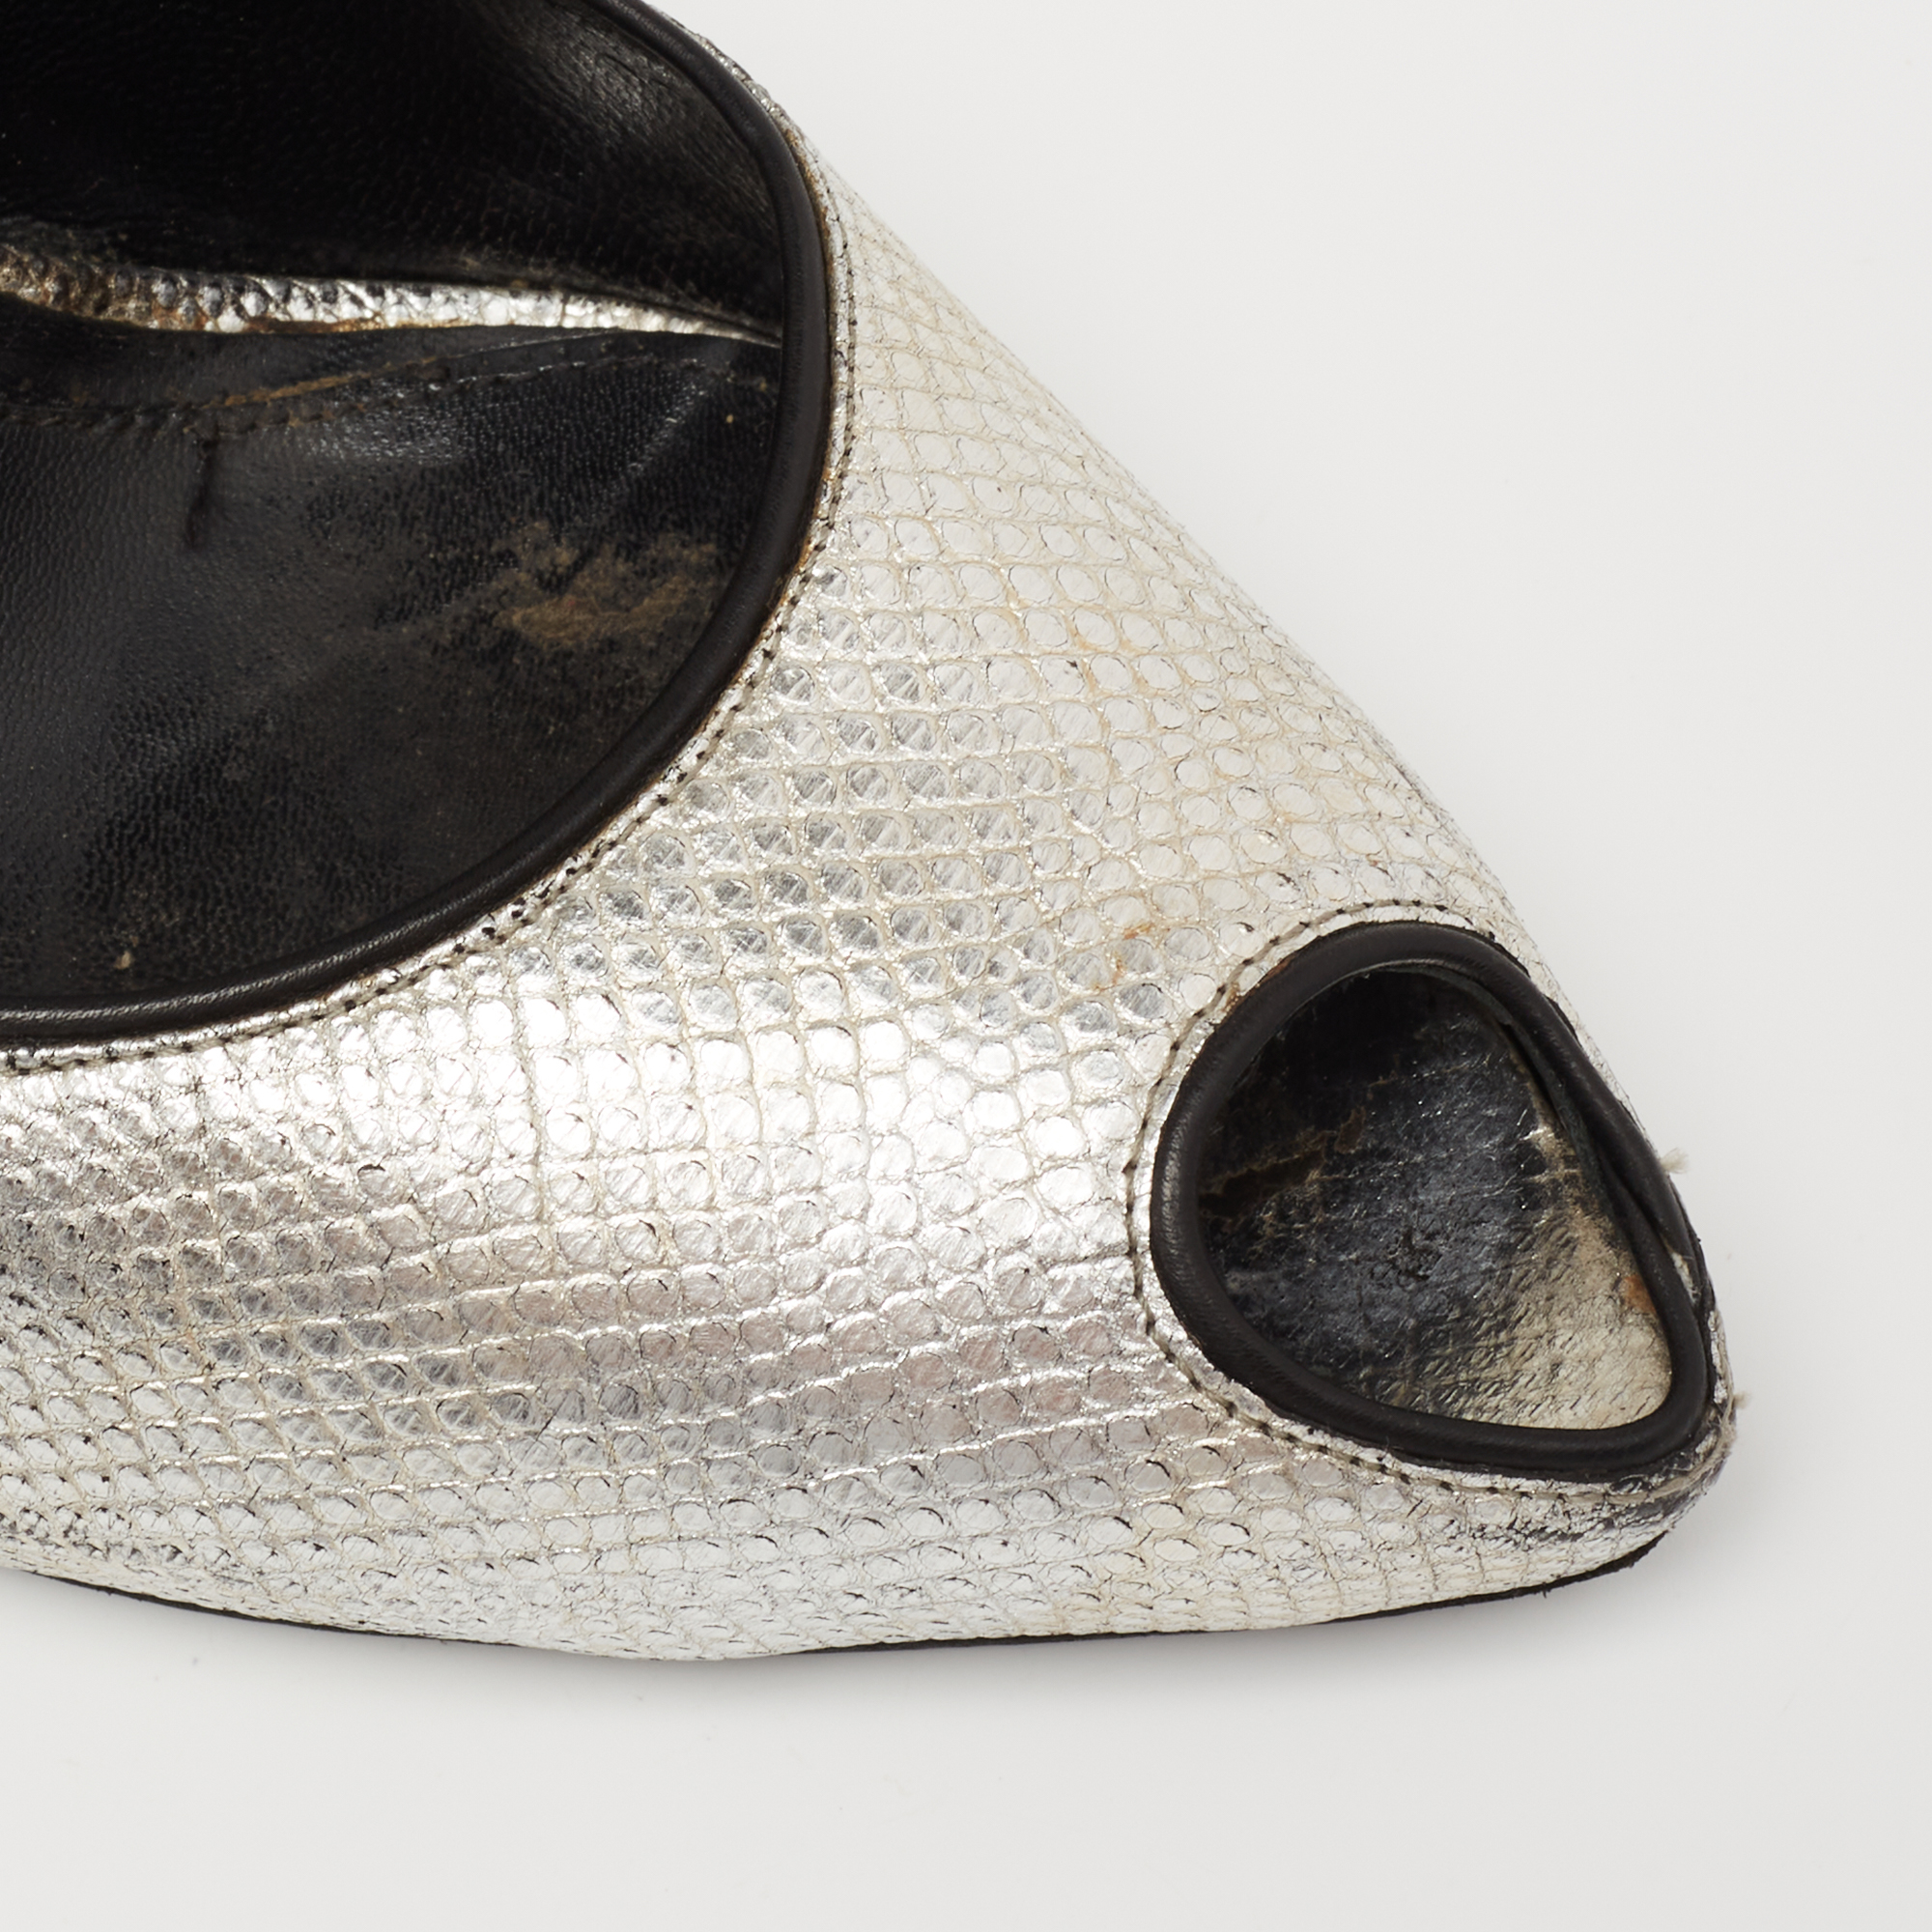 Alexander McQueen Silver Lizard Embossed Leather Peep-Toe Pumps Size 37.5